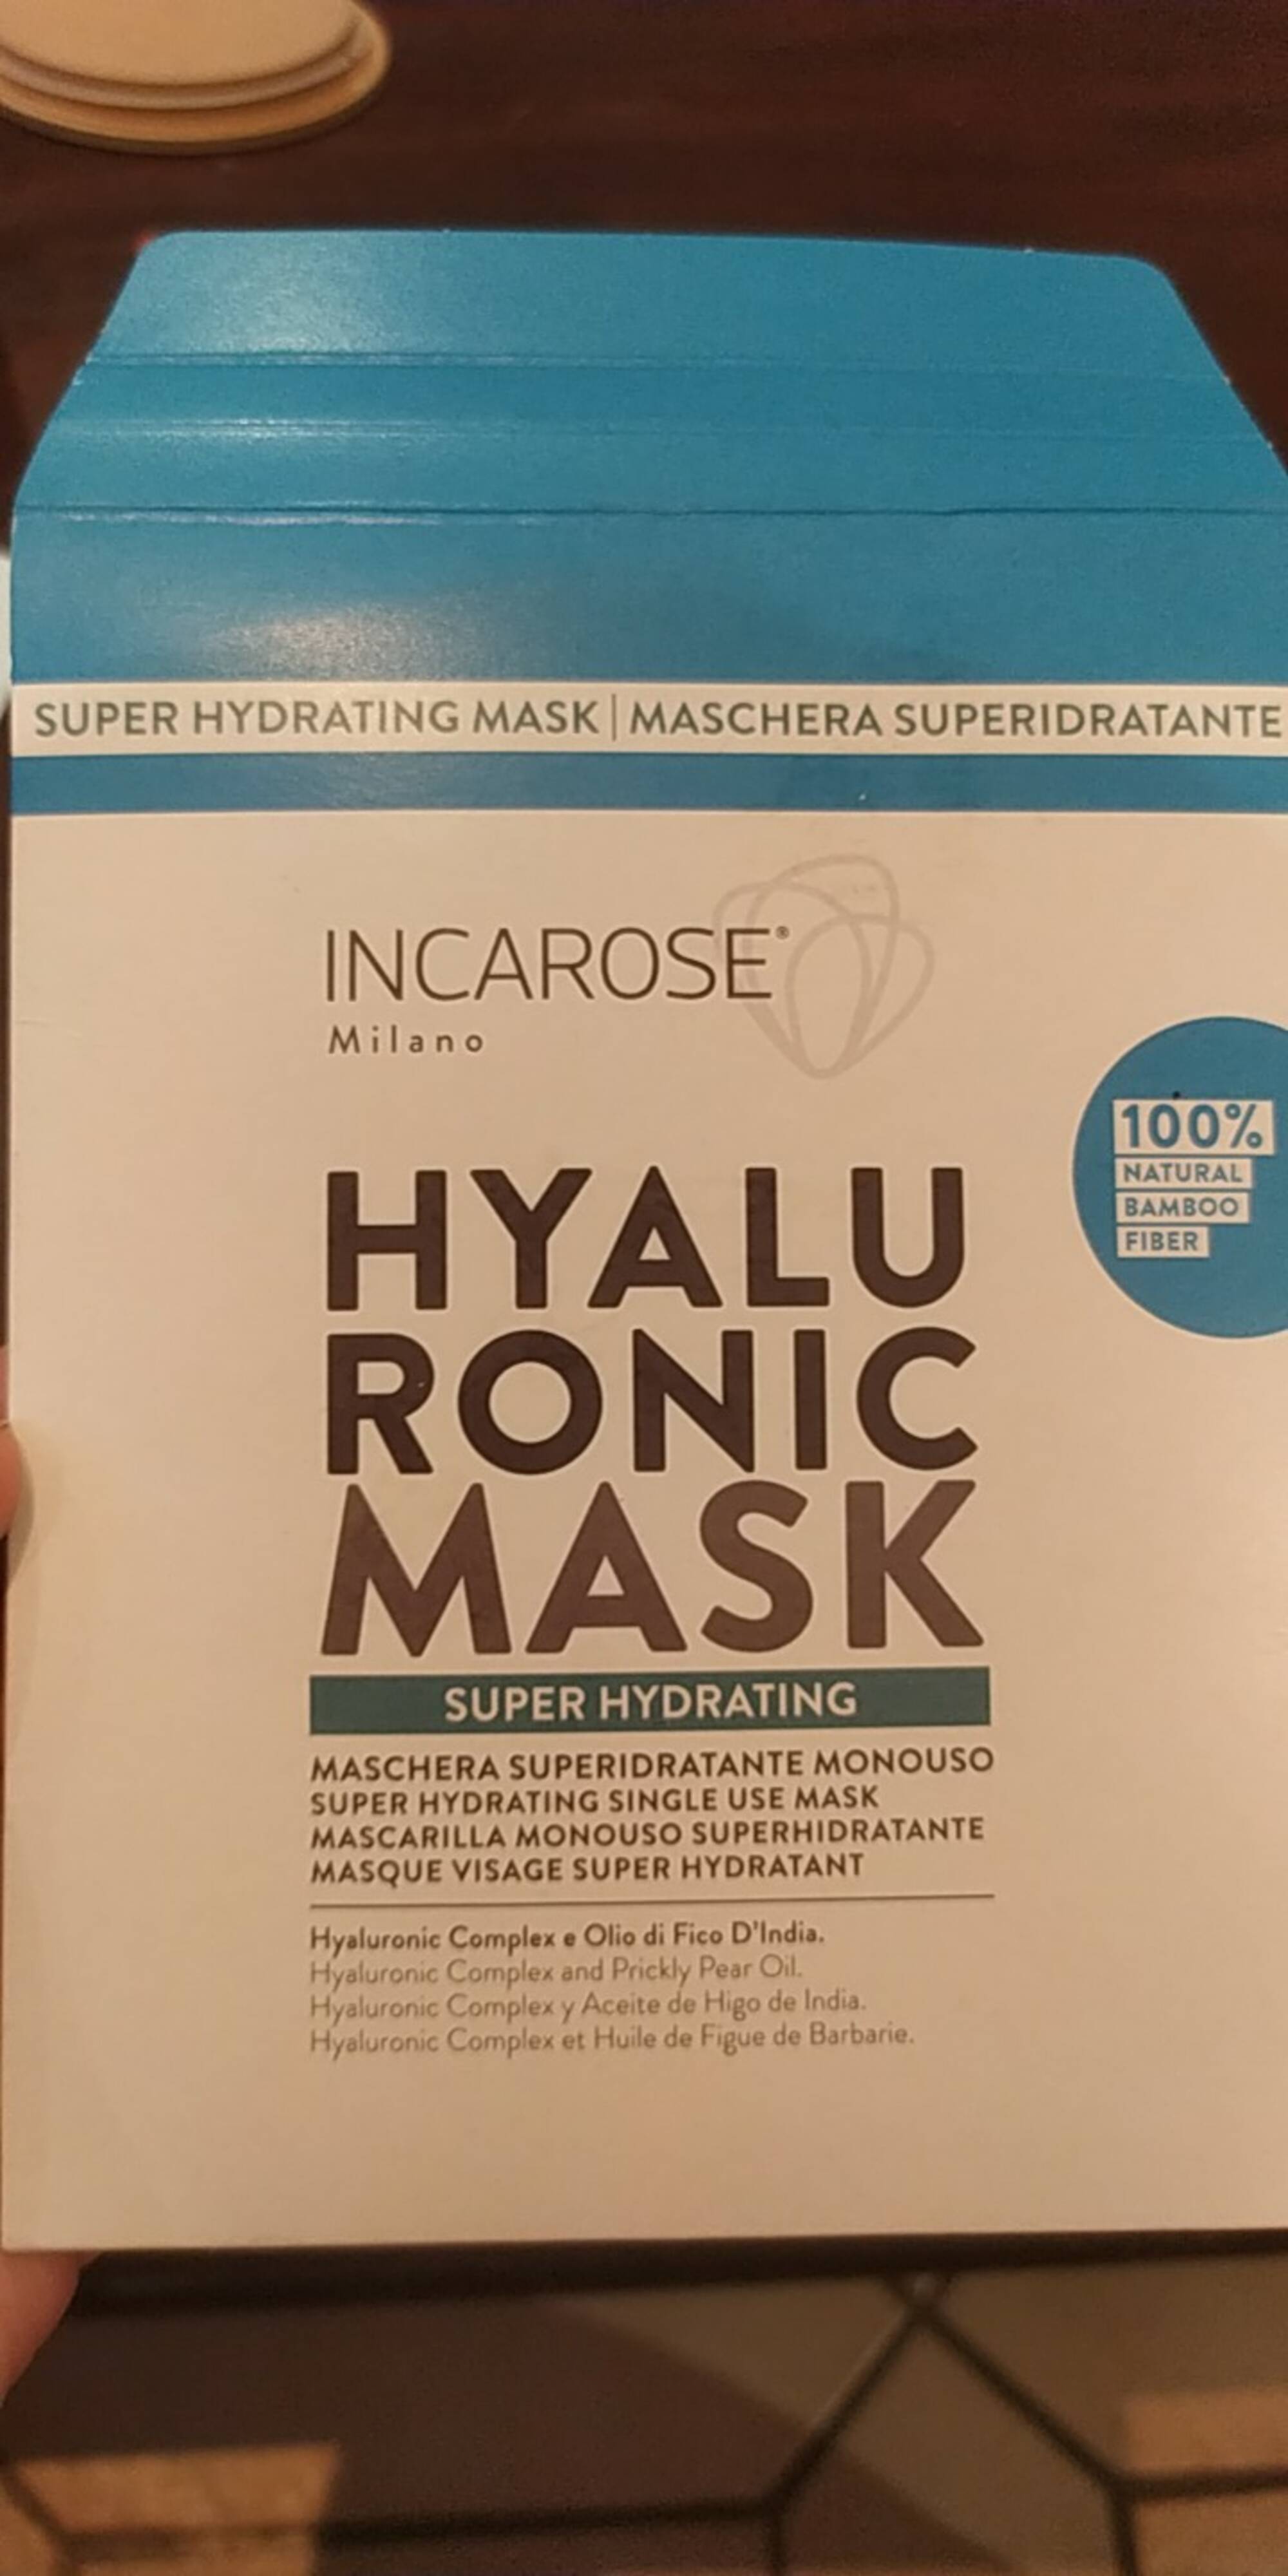 INCAROSE - Hyaluronic mask - Masque visage super hydratant